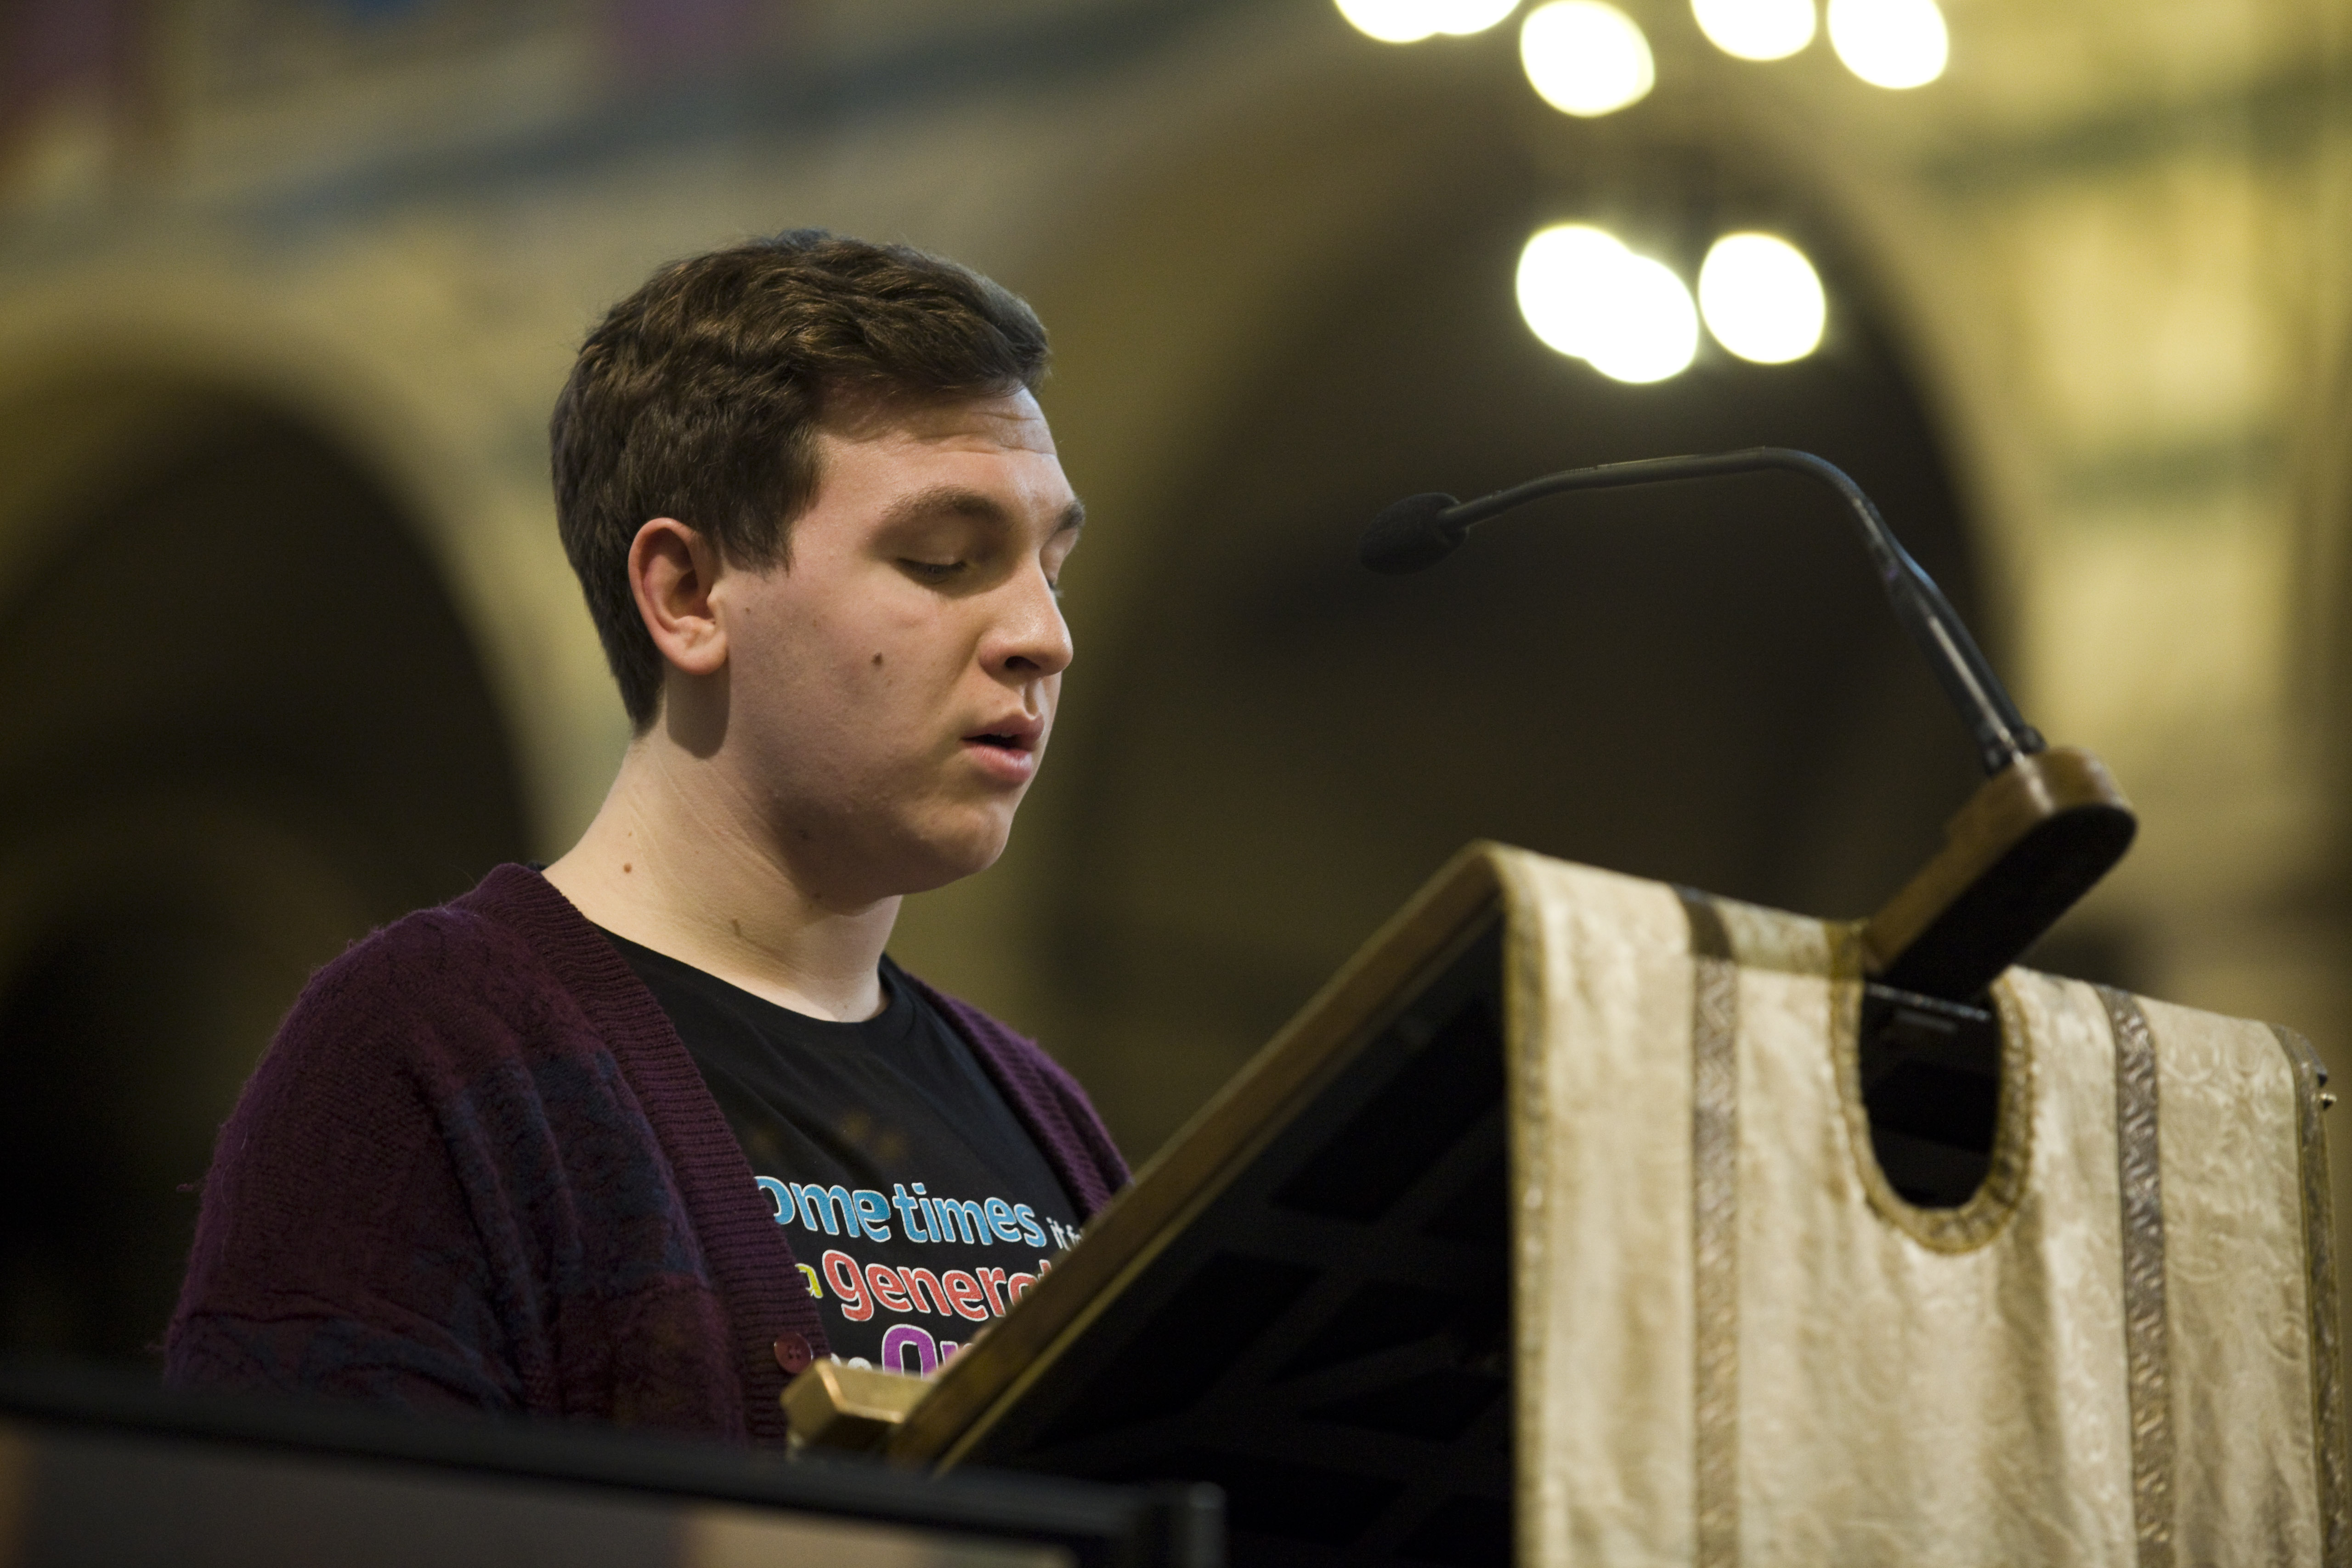 CAFOD supporter Ben Jackson speaking at Mass